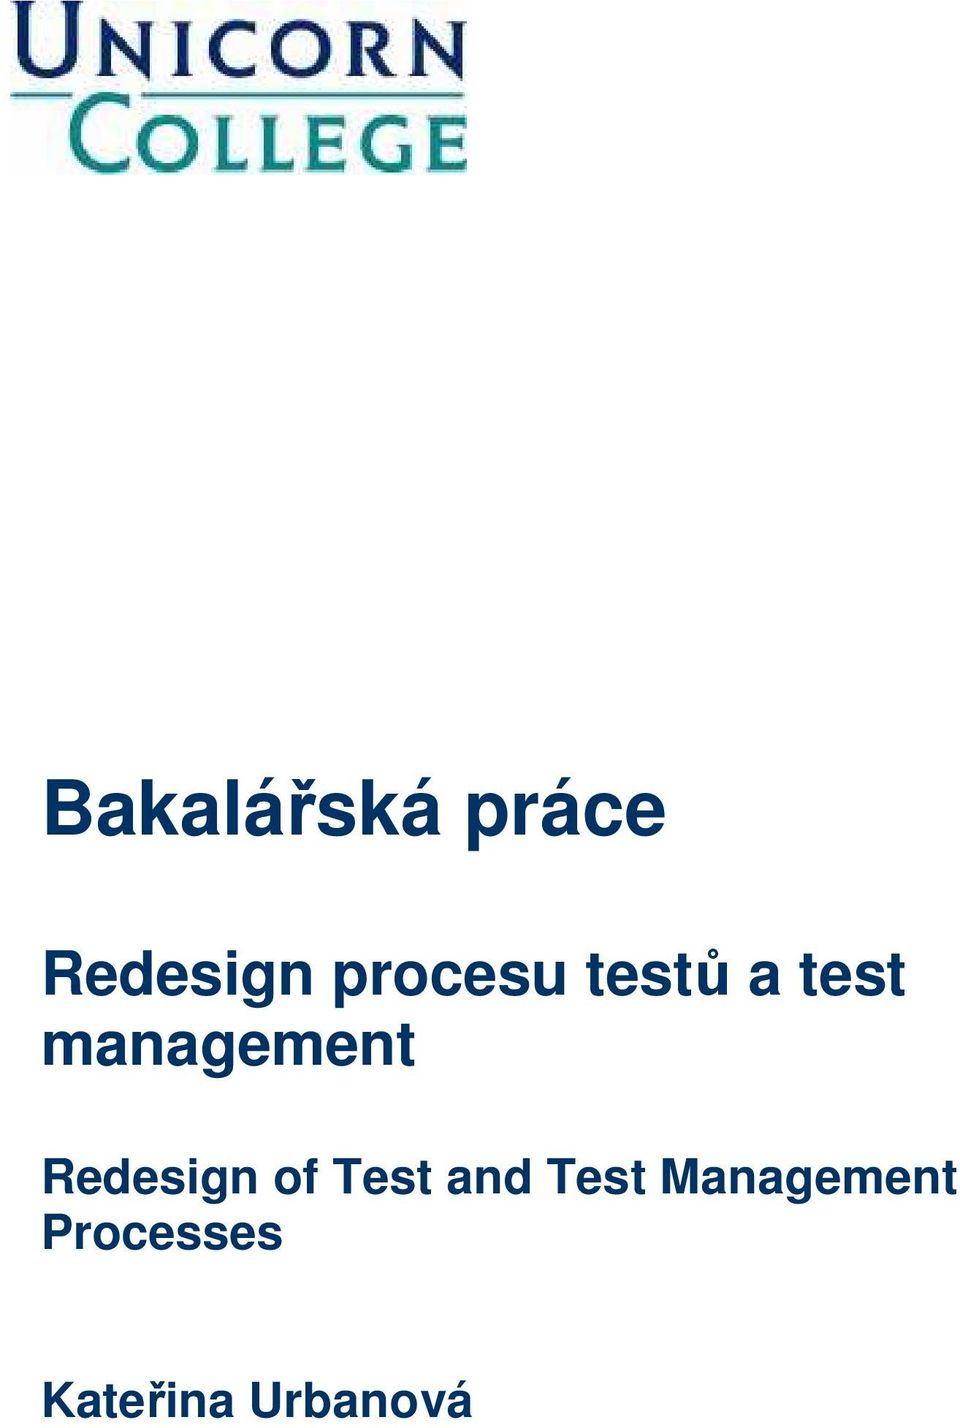 management Redesign f Test